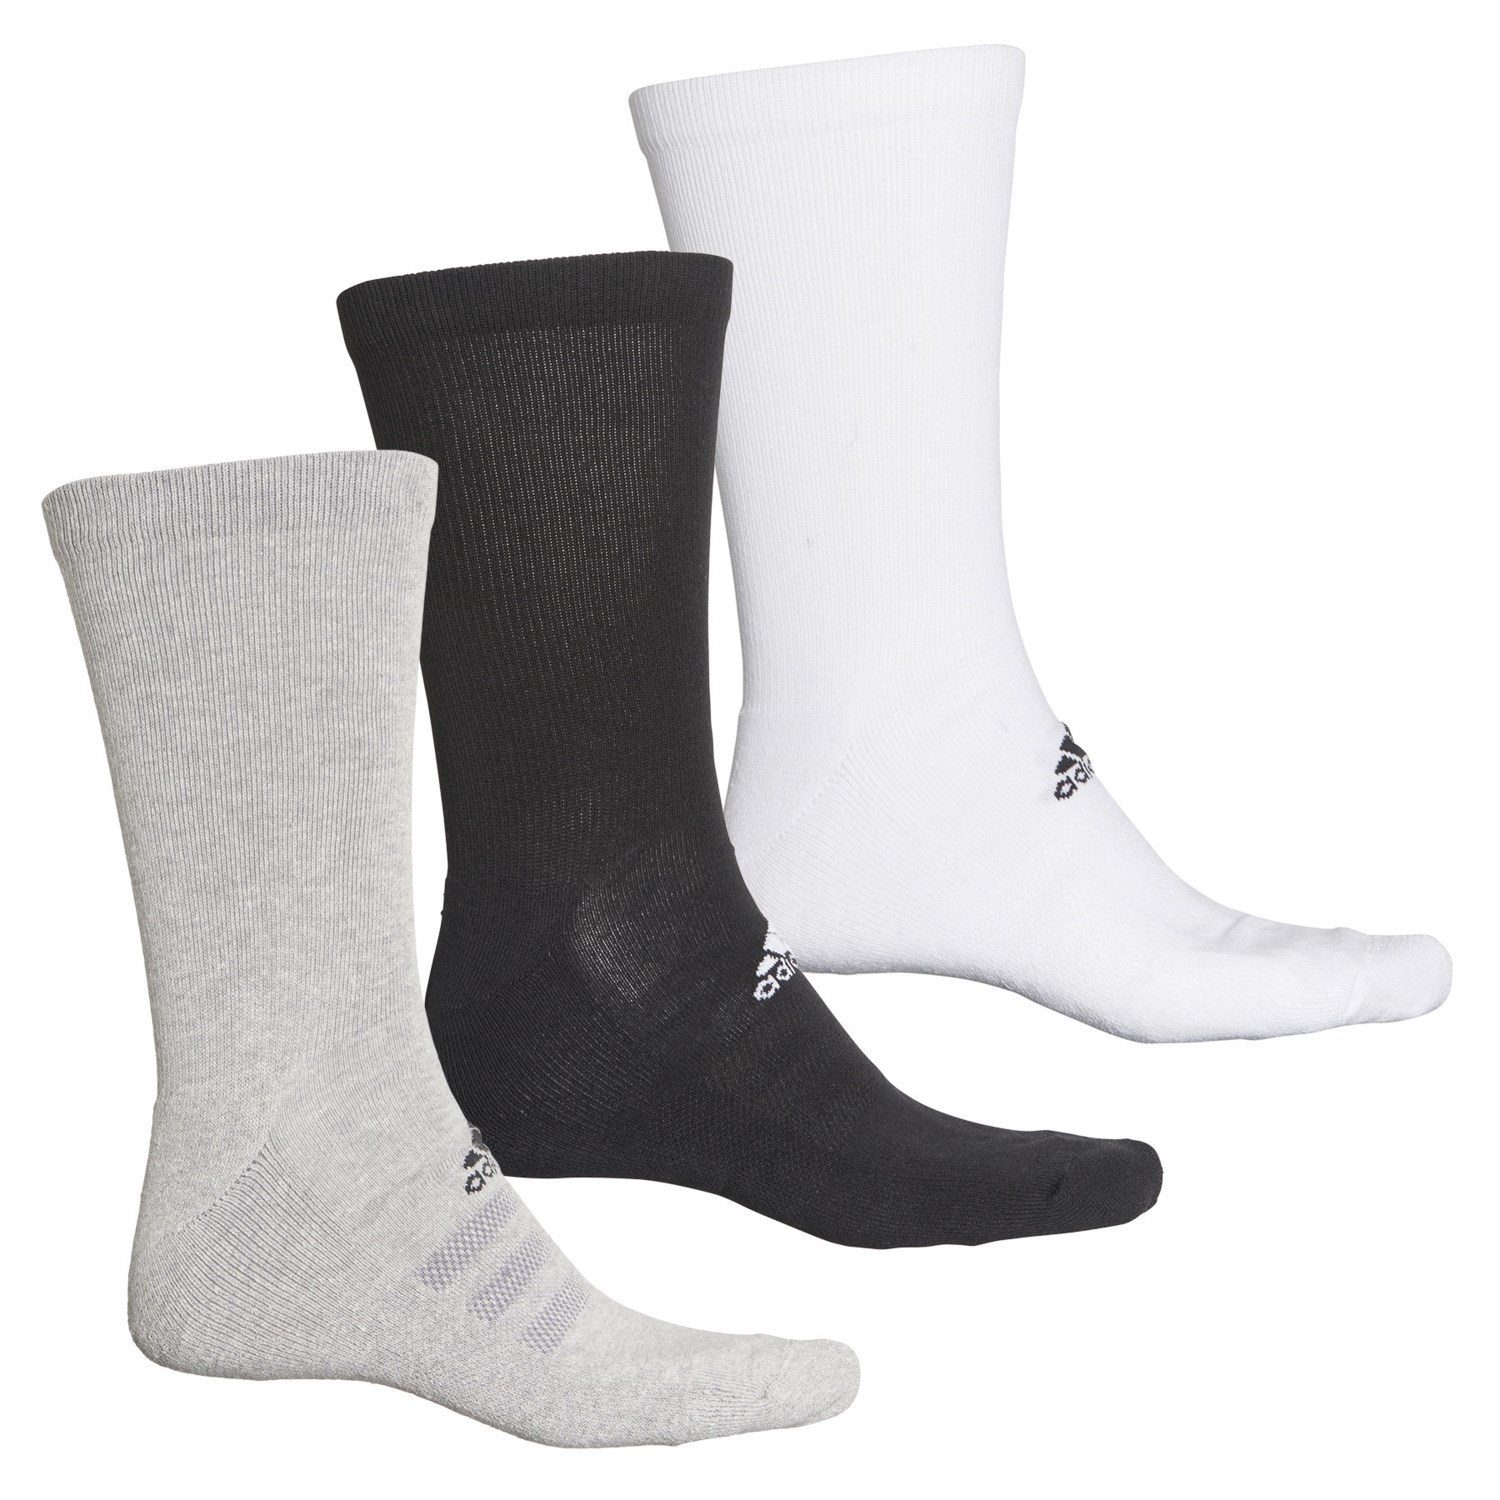 adidas Golf Socks (For Men) - Save 40%